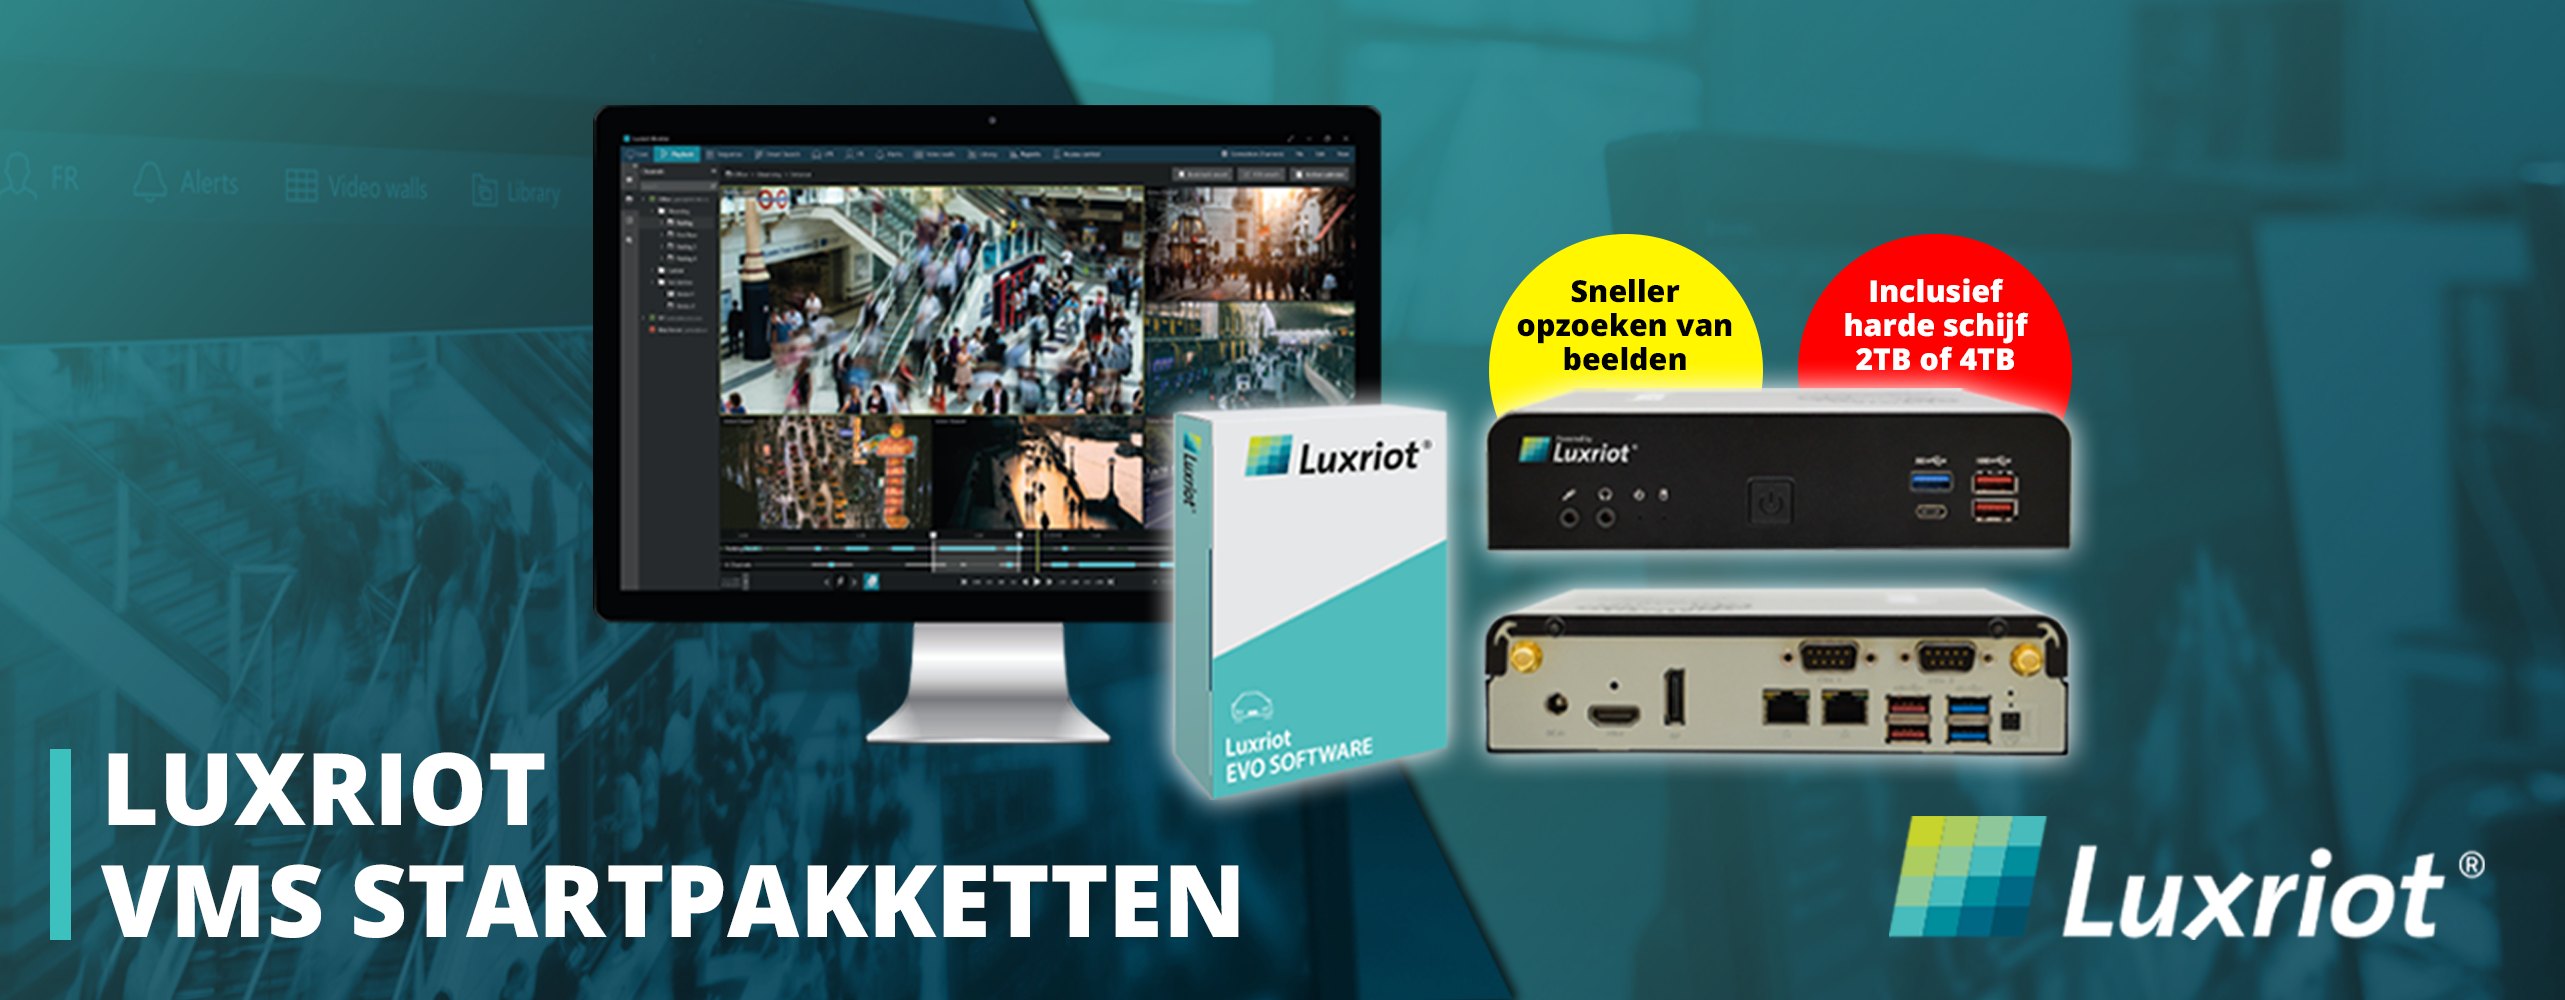 Luxriot: startpakketten "Video Management Software"